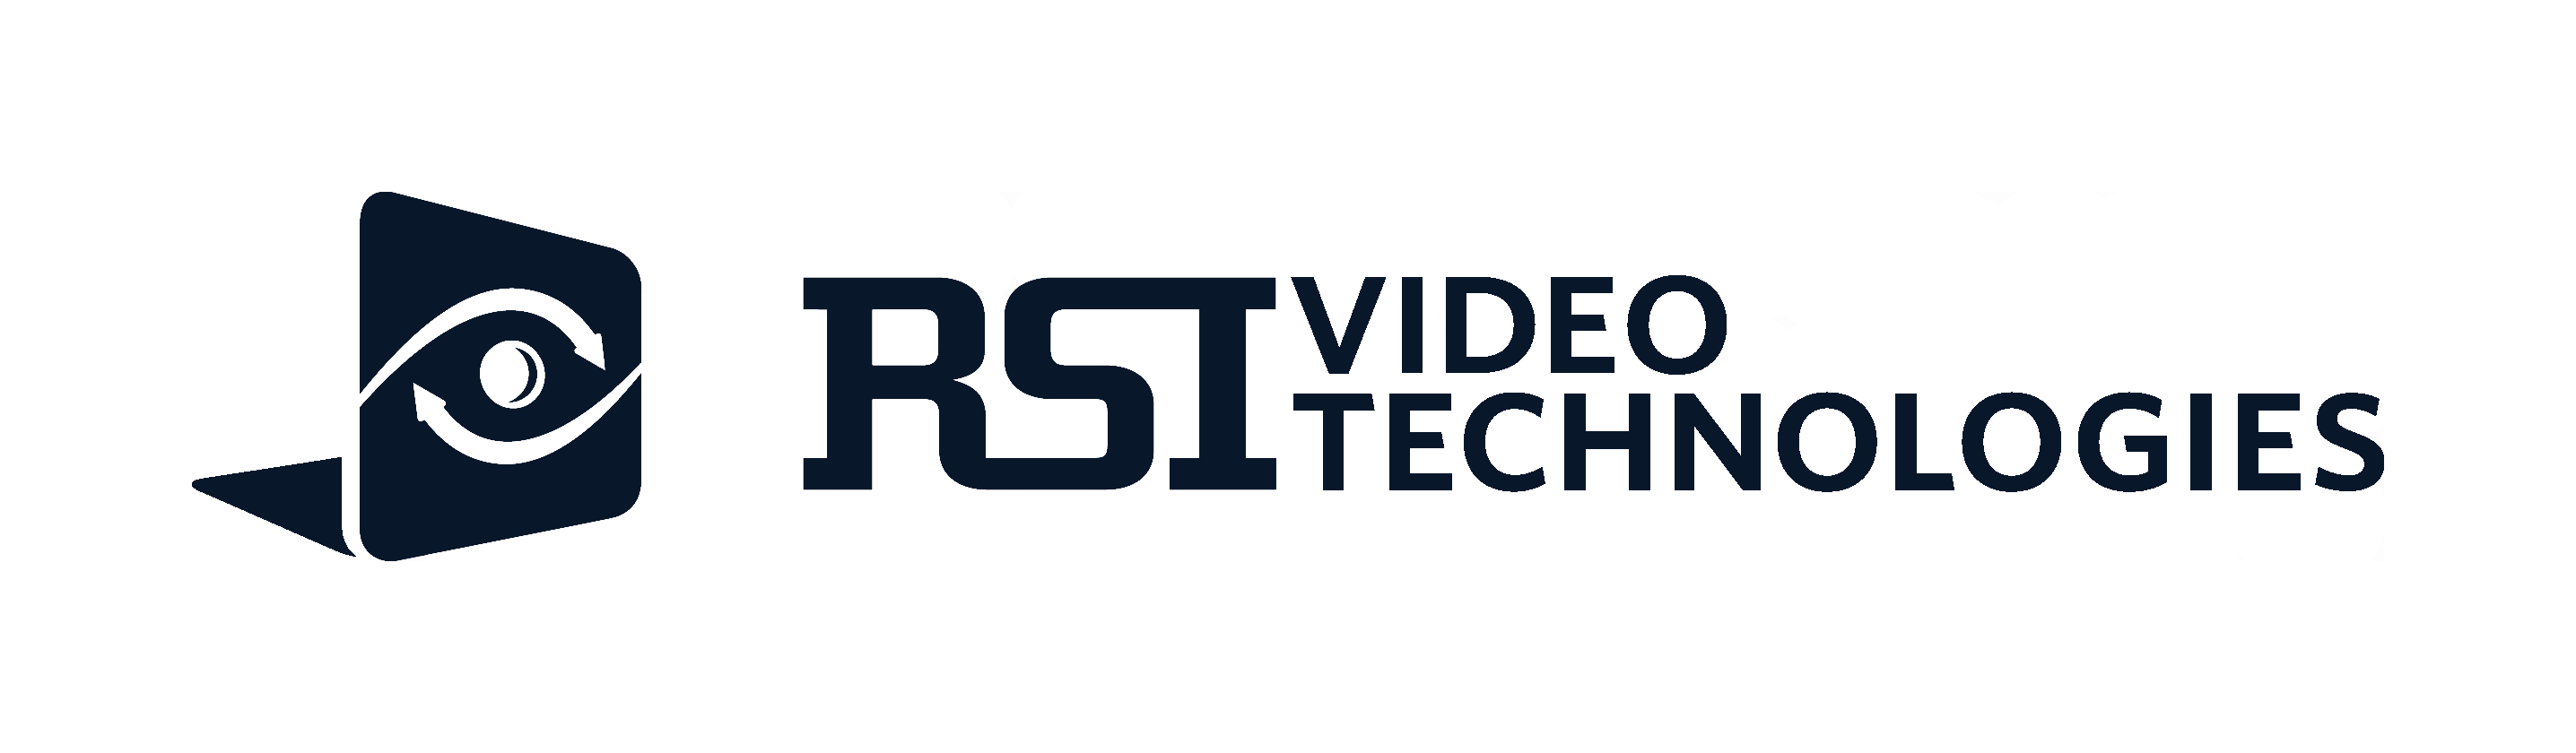 RSI Video Technologies